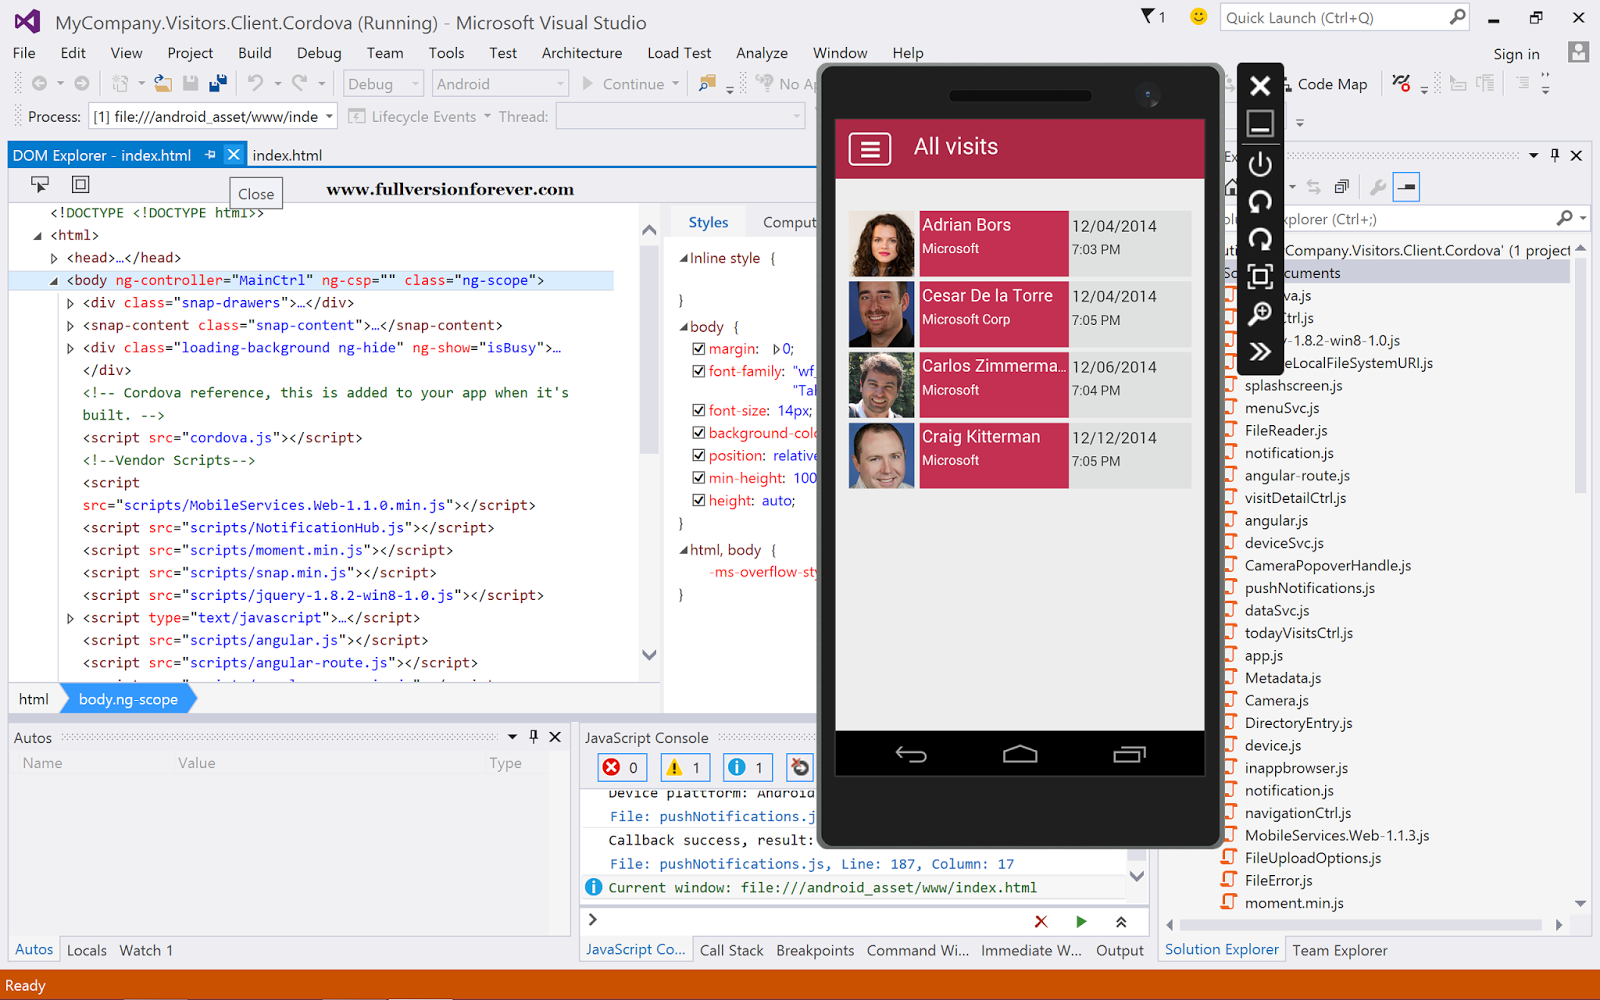 Download Microsoft Visual Studio 2015 Professional Edition with key ...